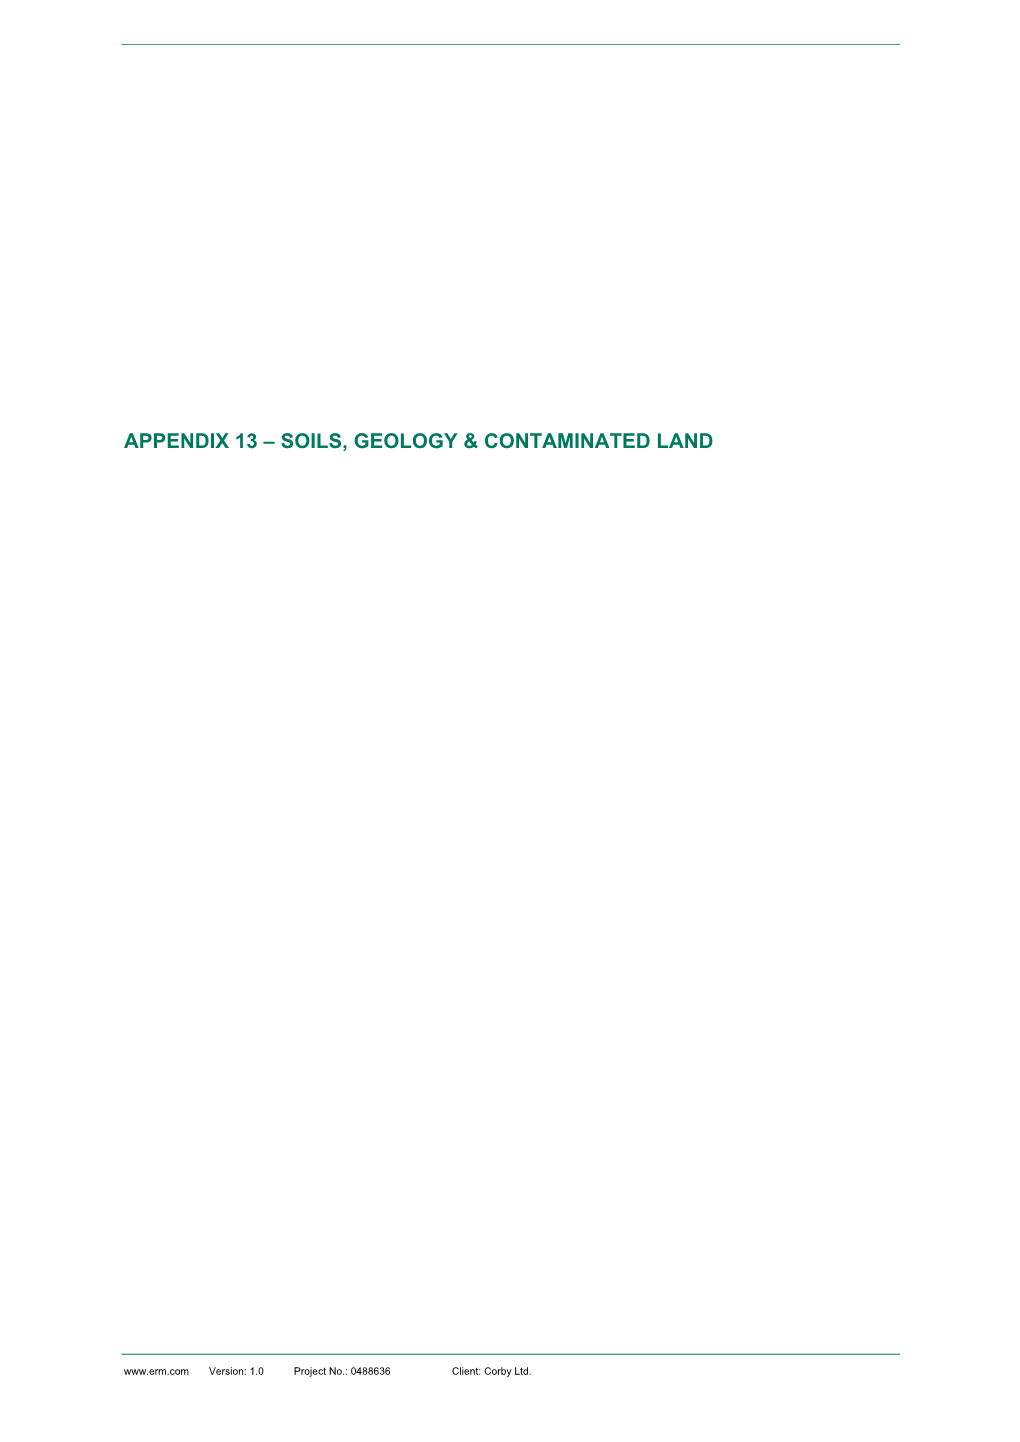 Appendix 13 – Soils, Geology & Contaminated Land